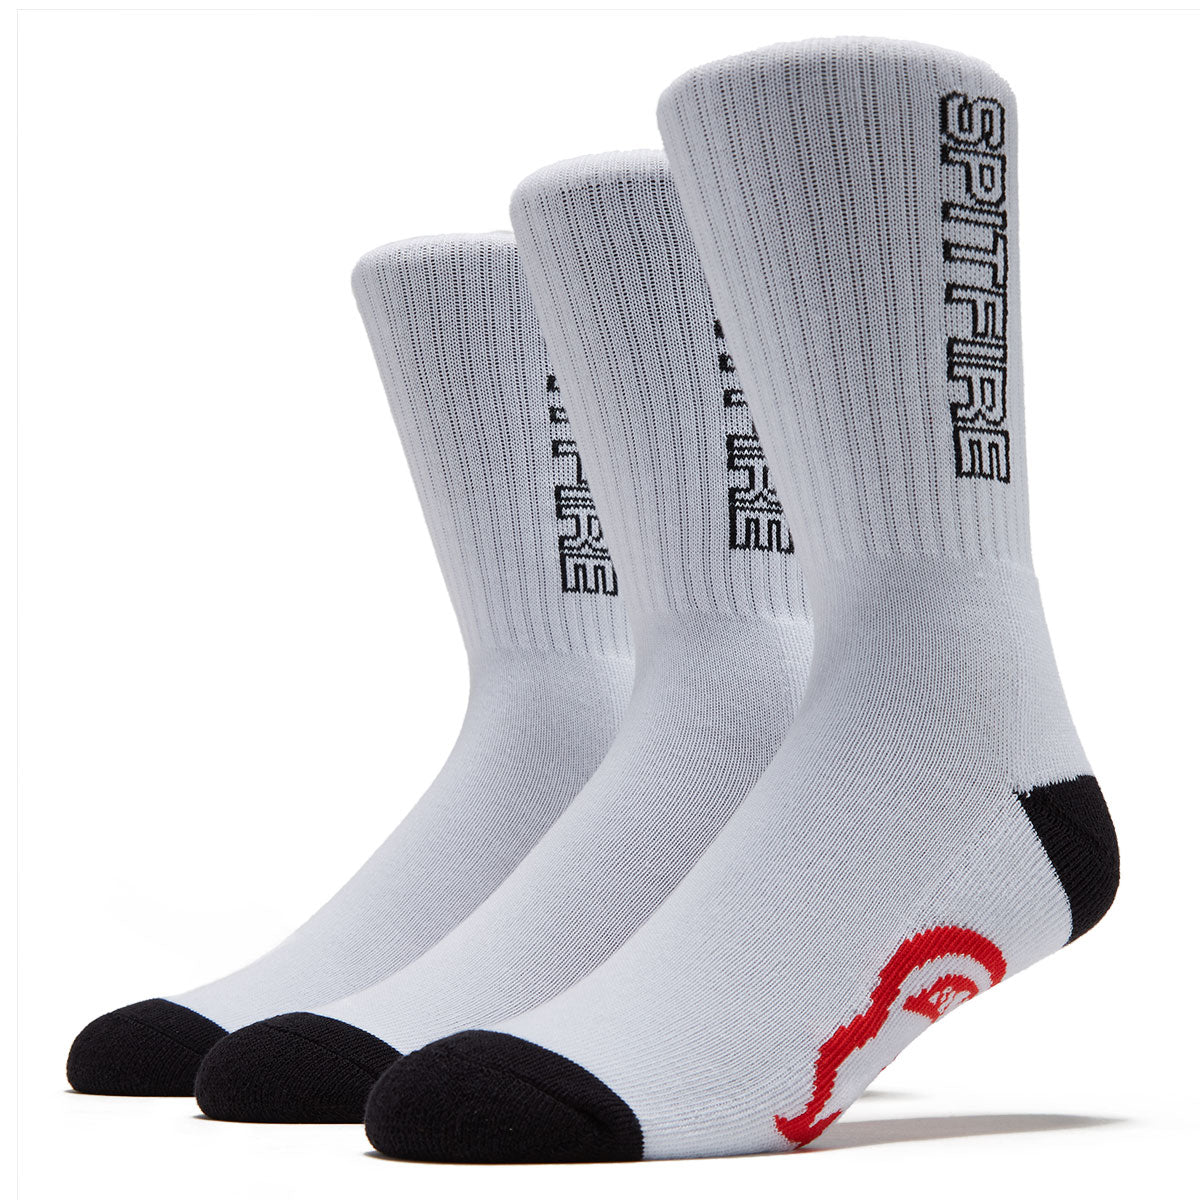 Spitfire Classic 87 3 Pack of Socks - White/Black/Red image 1